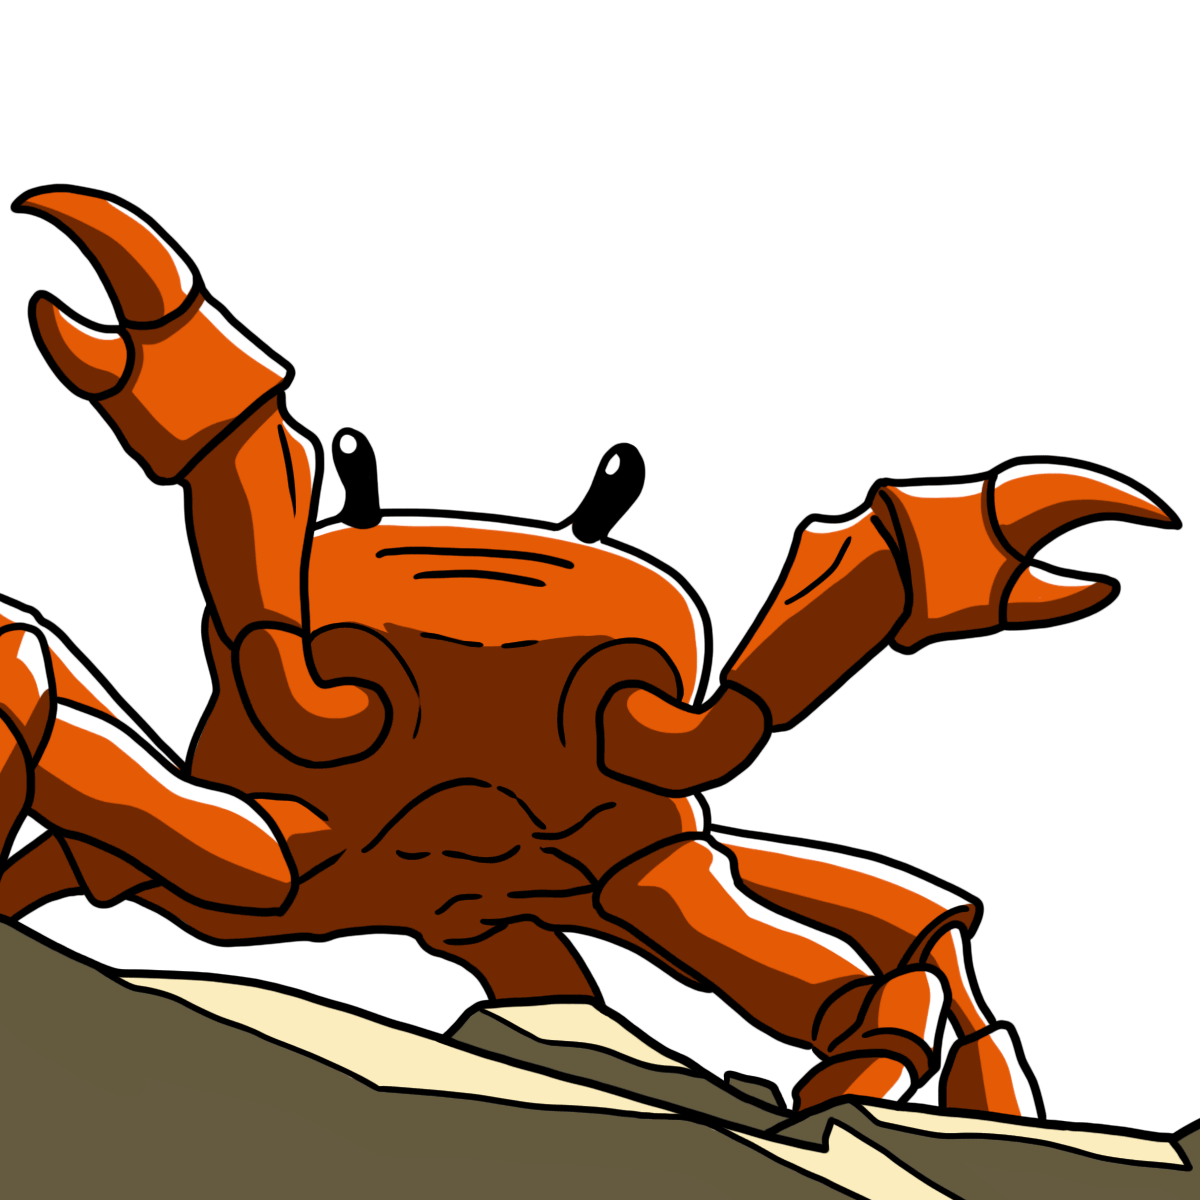 crab rave gif maker